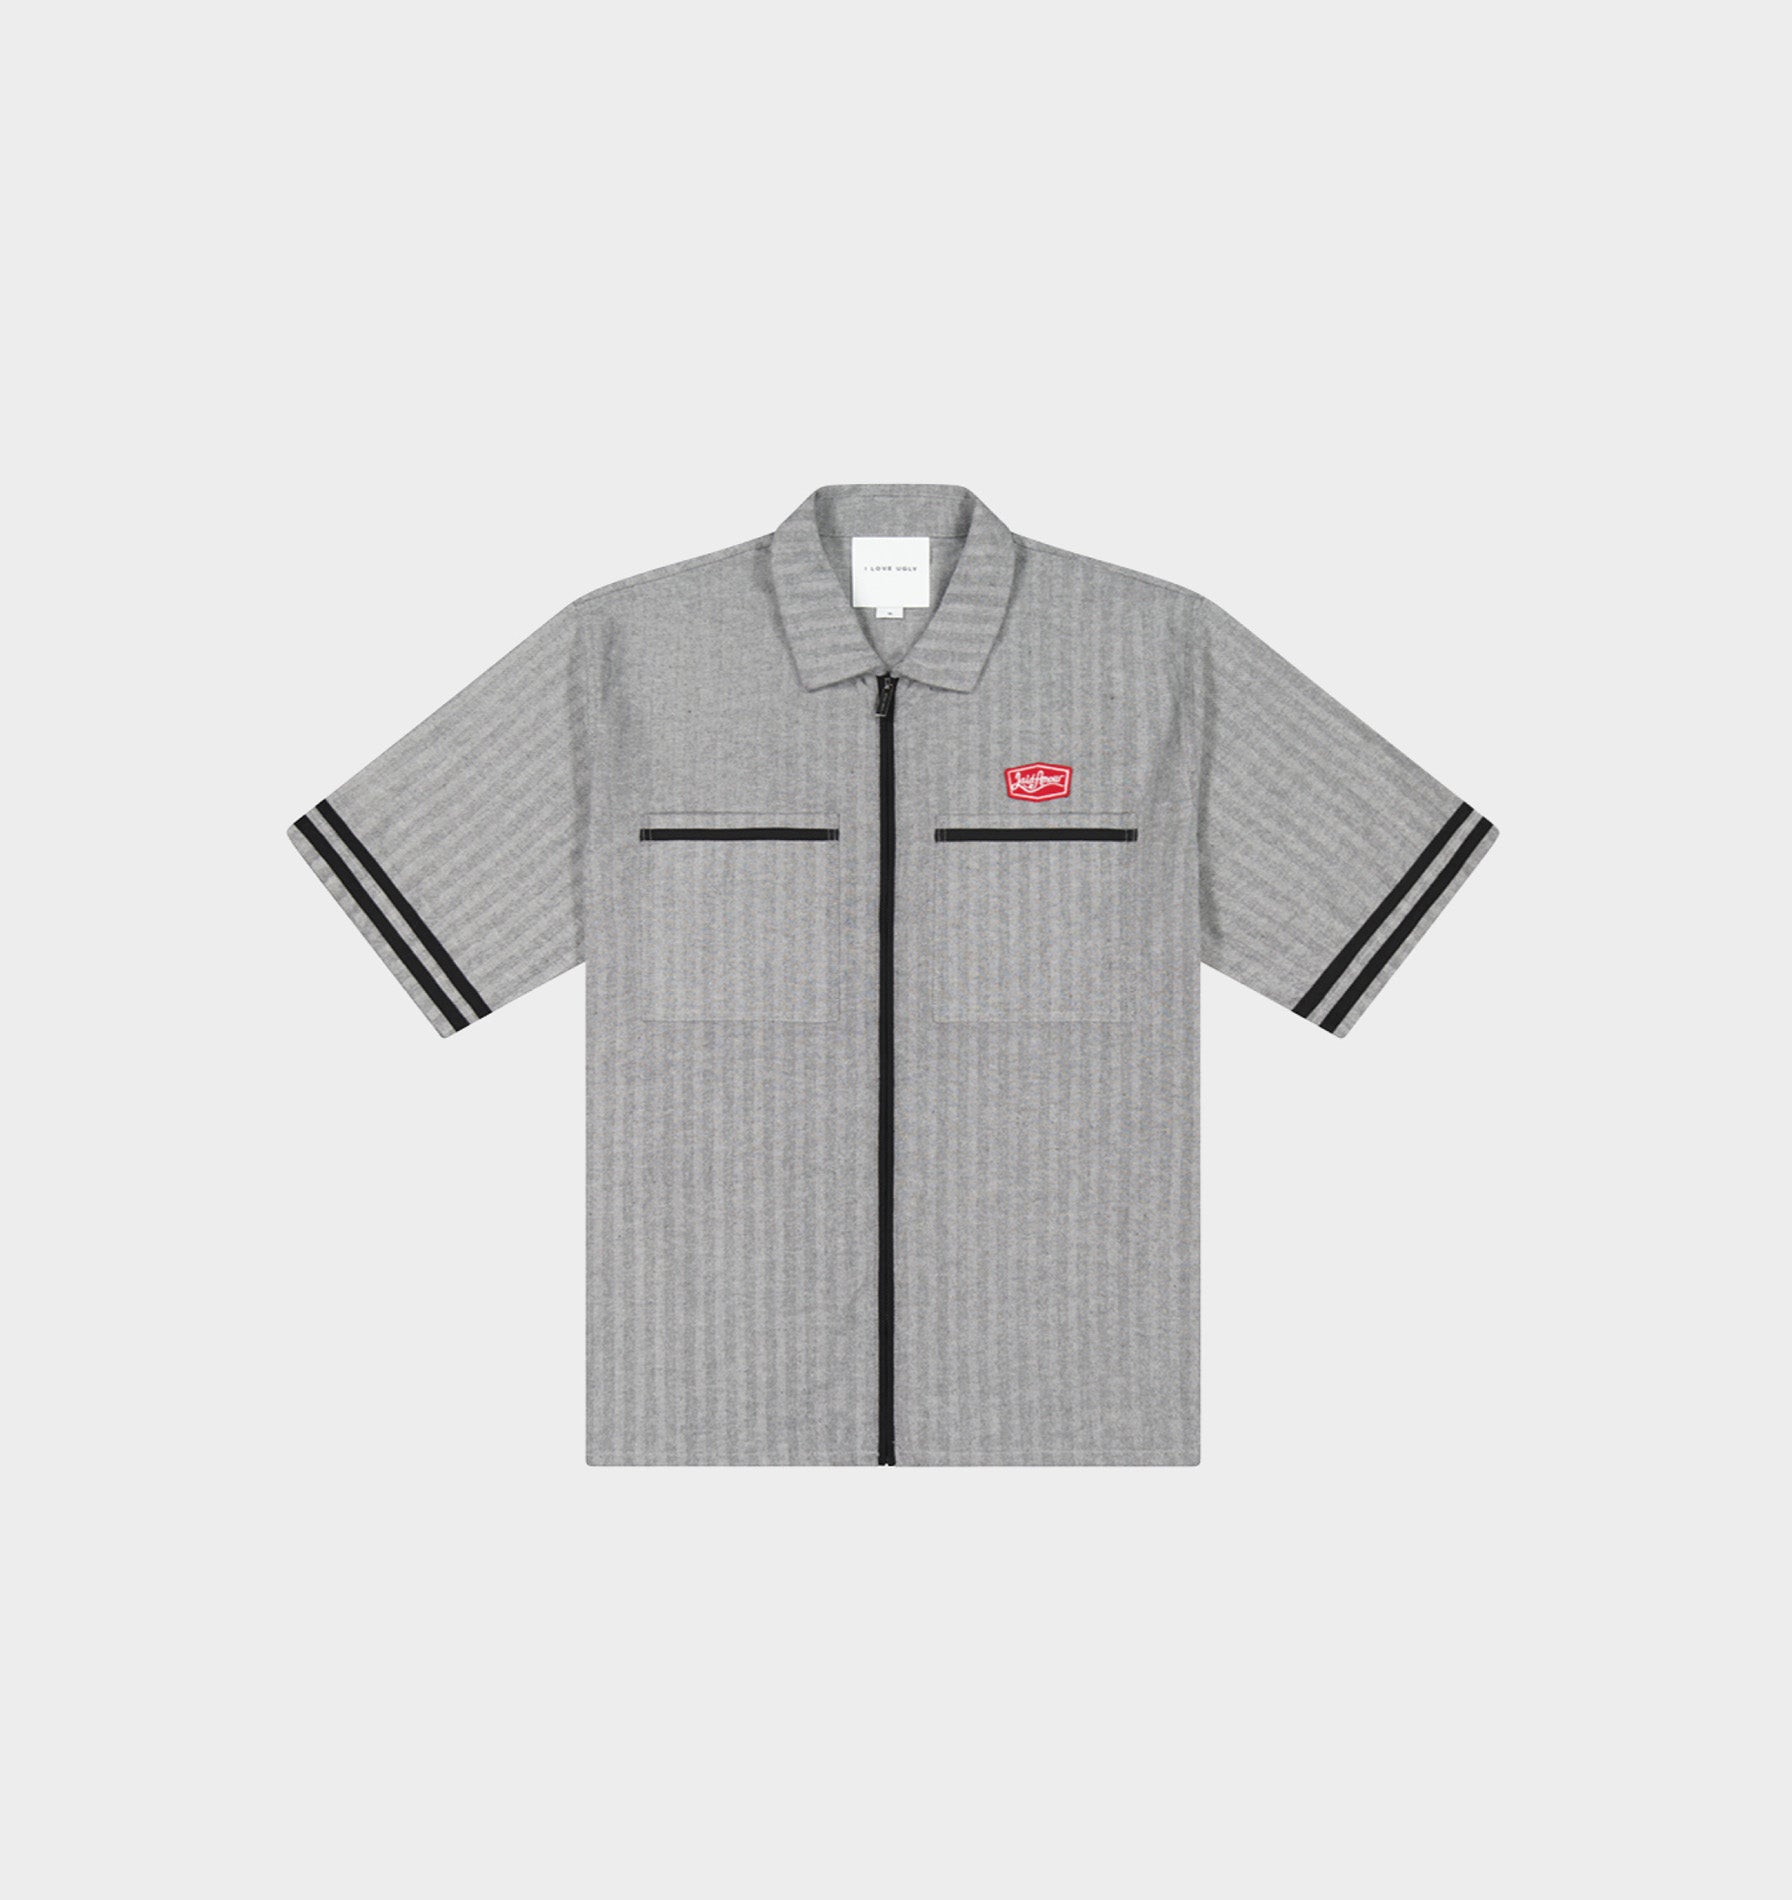 Douglas Workwear SS Shirt - Grey Herringbone